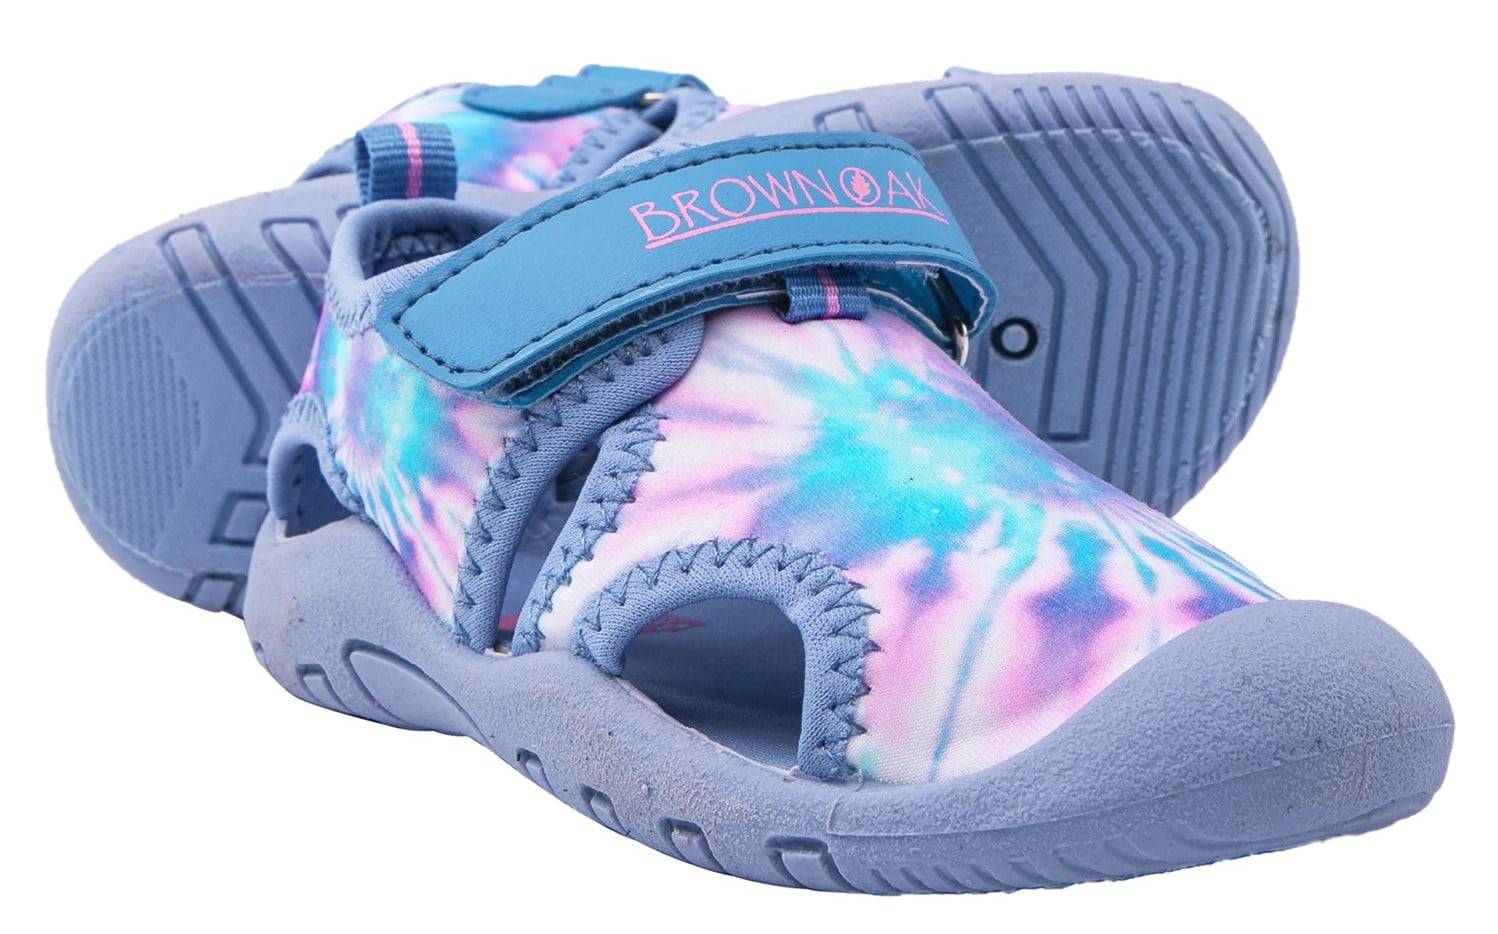 KARIDO Kids Slip-on Quick Drying Aqua Water Shoes Athletic Sneakers